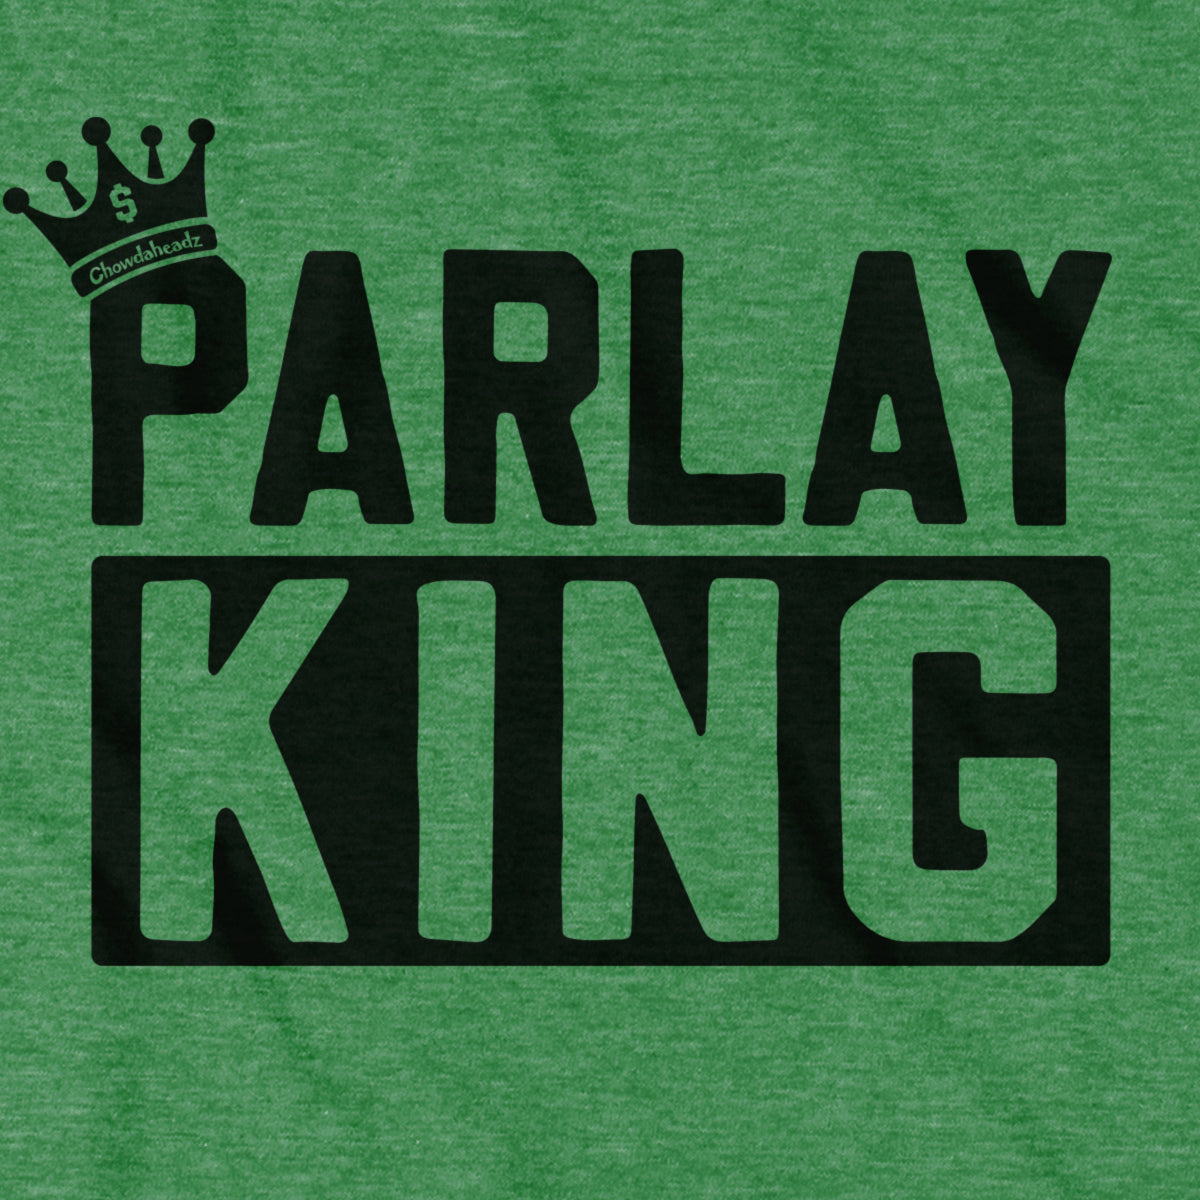 Parlay King T-shirt - Chowdaheadz